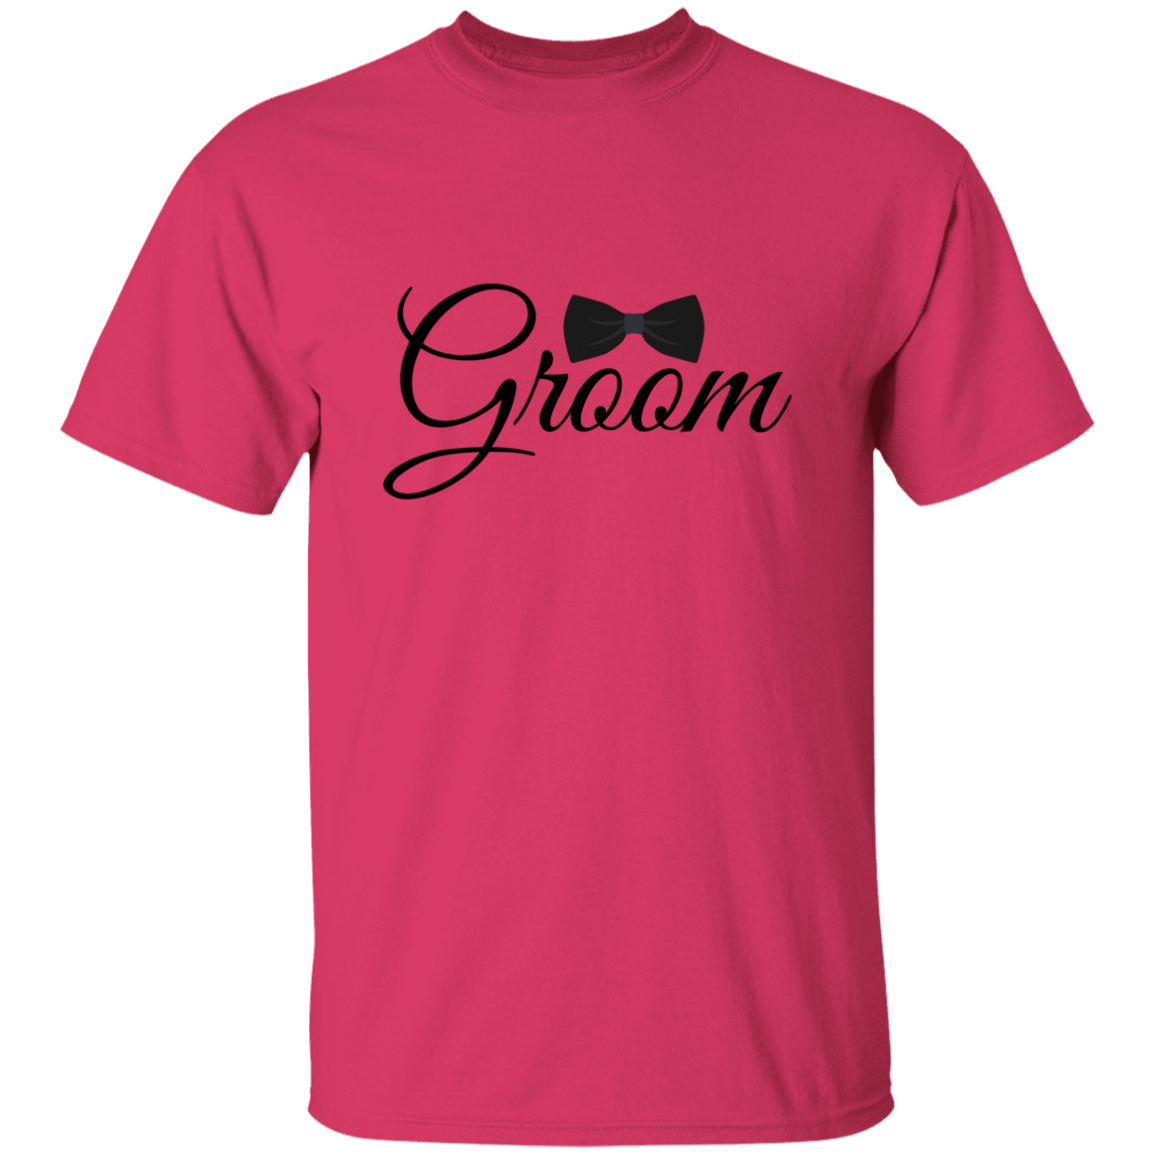 Groom ~ With Bow Tie / Wedding T-Shirt, Wedding Attire,